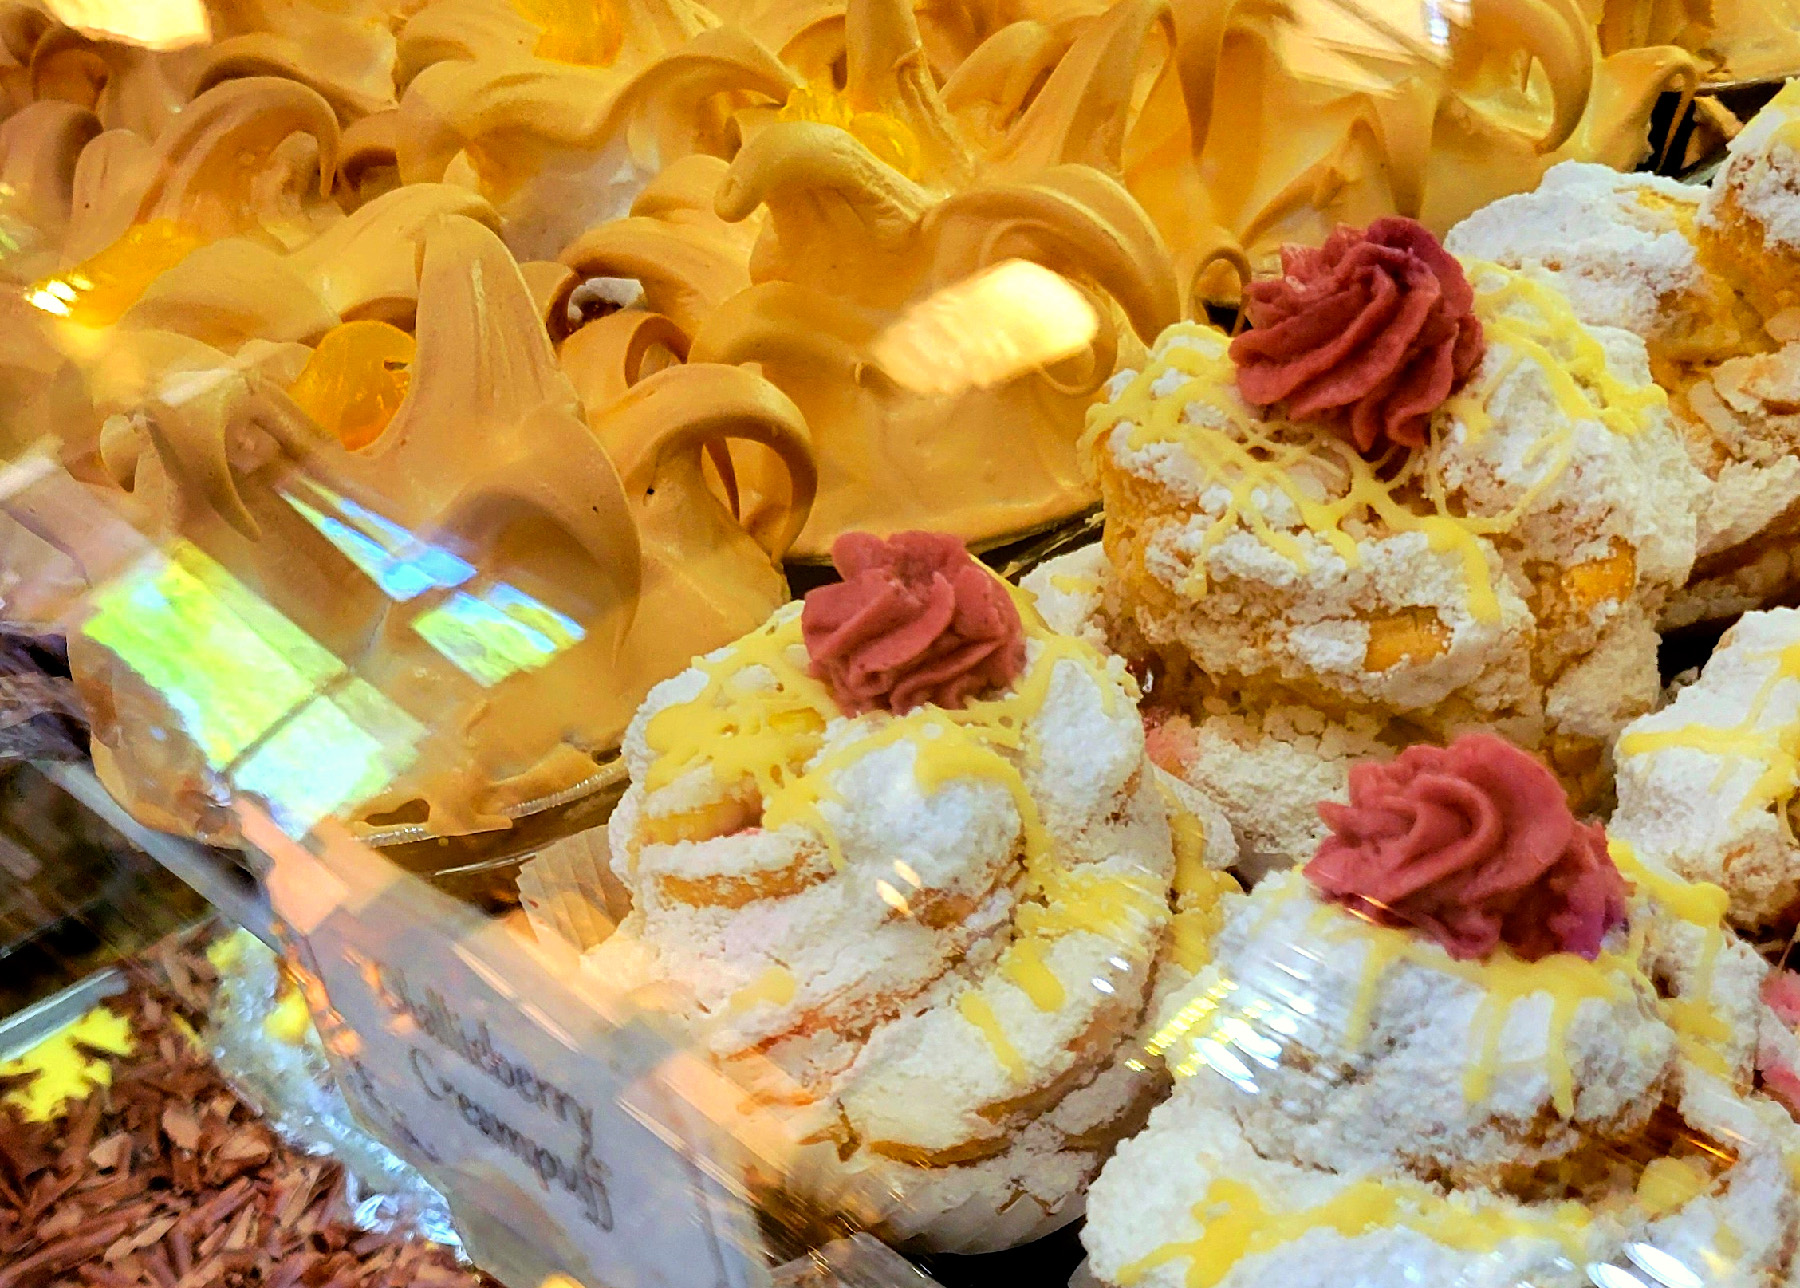 A pastry from Linn’s Restaurant